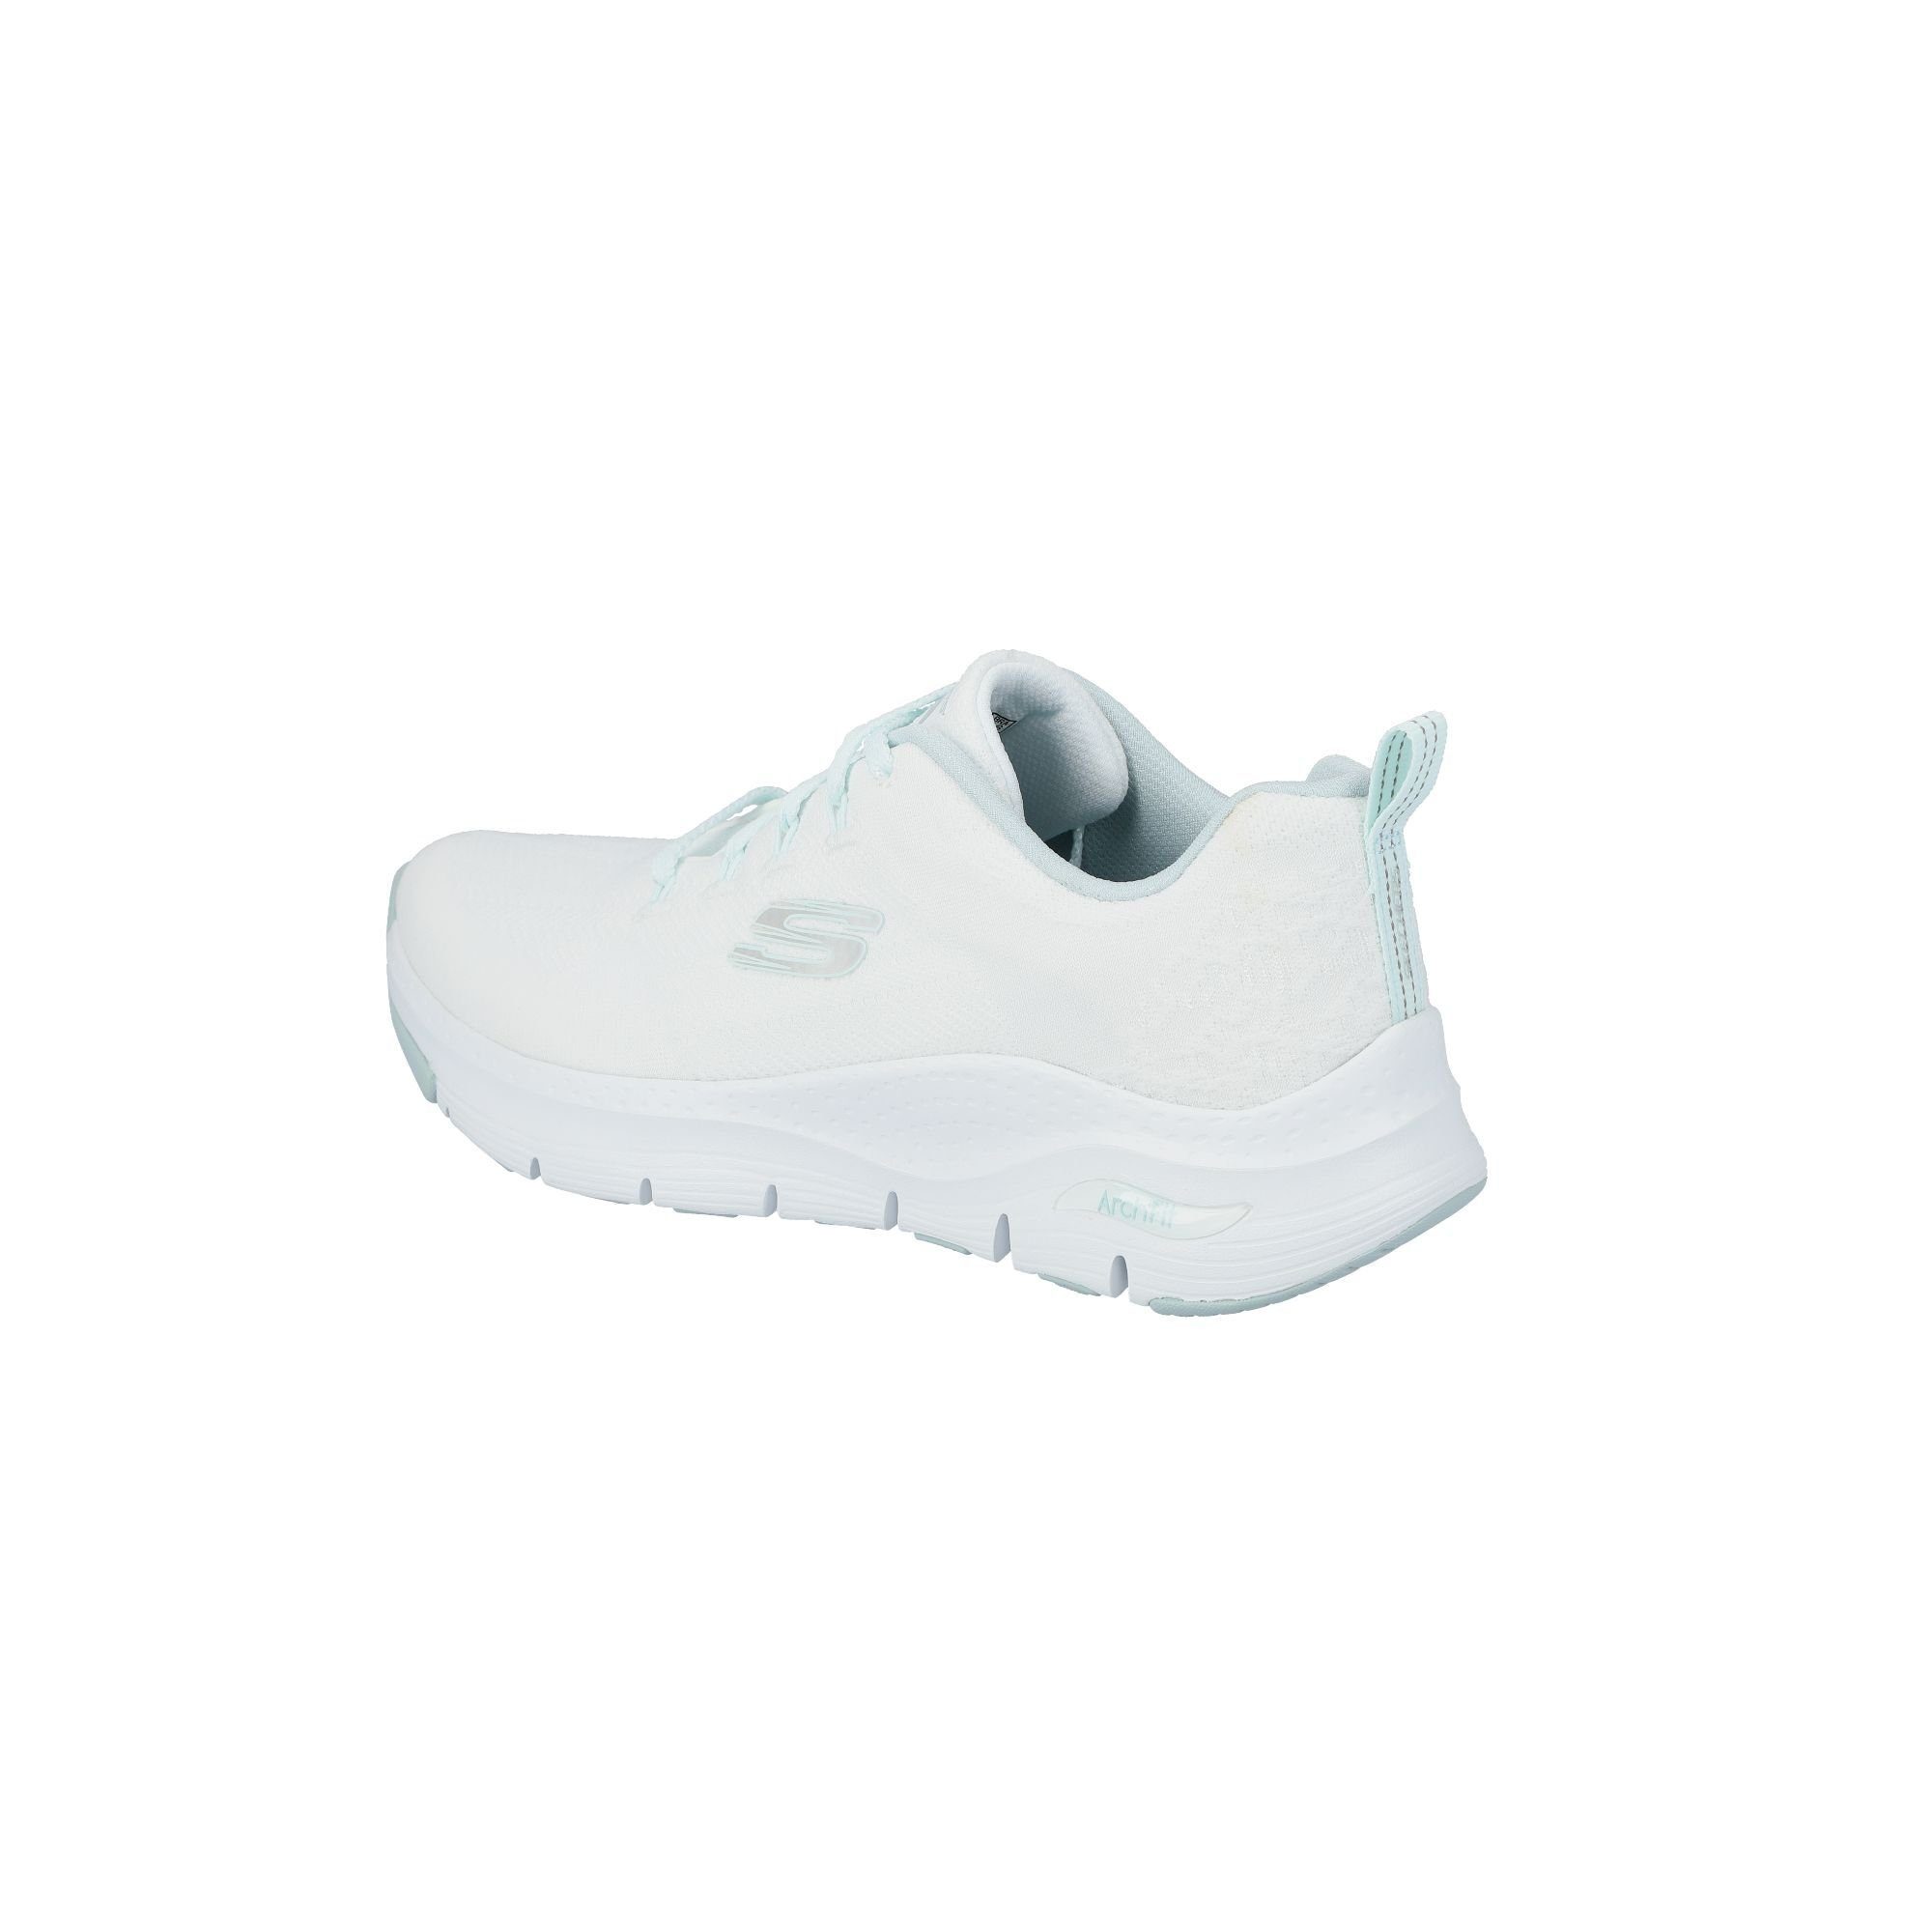 Skechers ARCH FIT - COMFY WAVE Sneaker online kaufen | OTTO